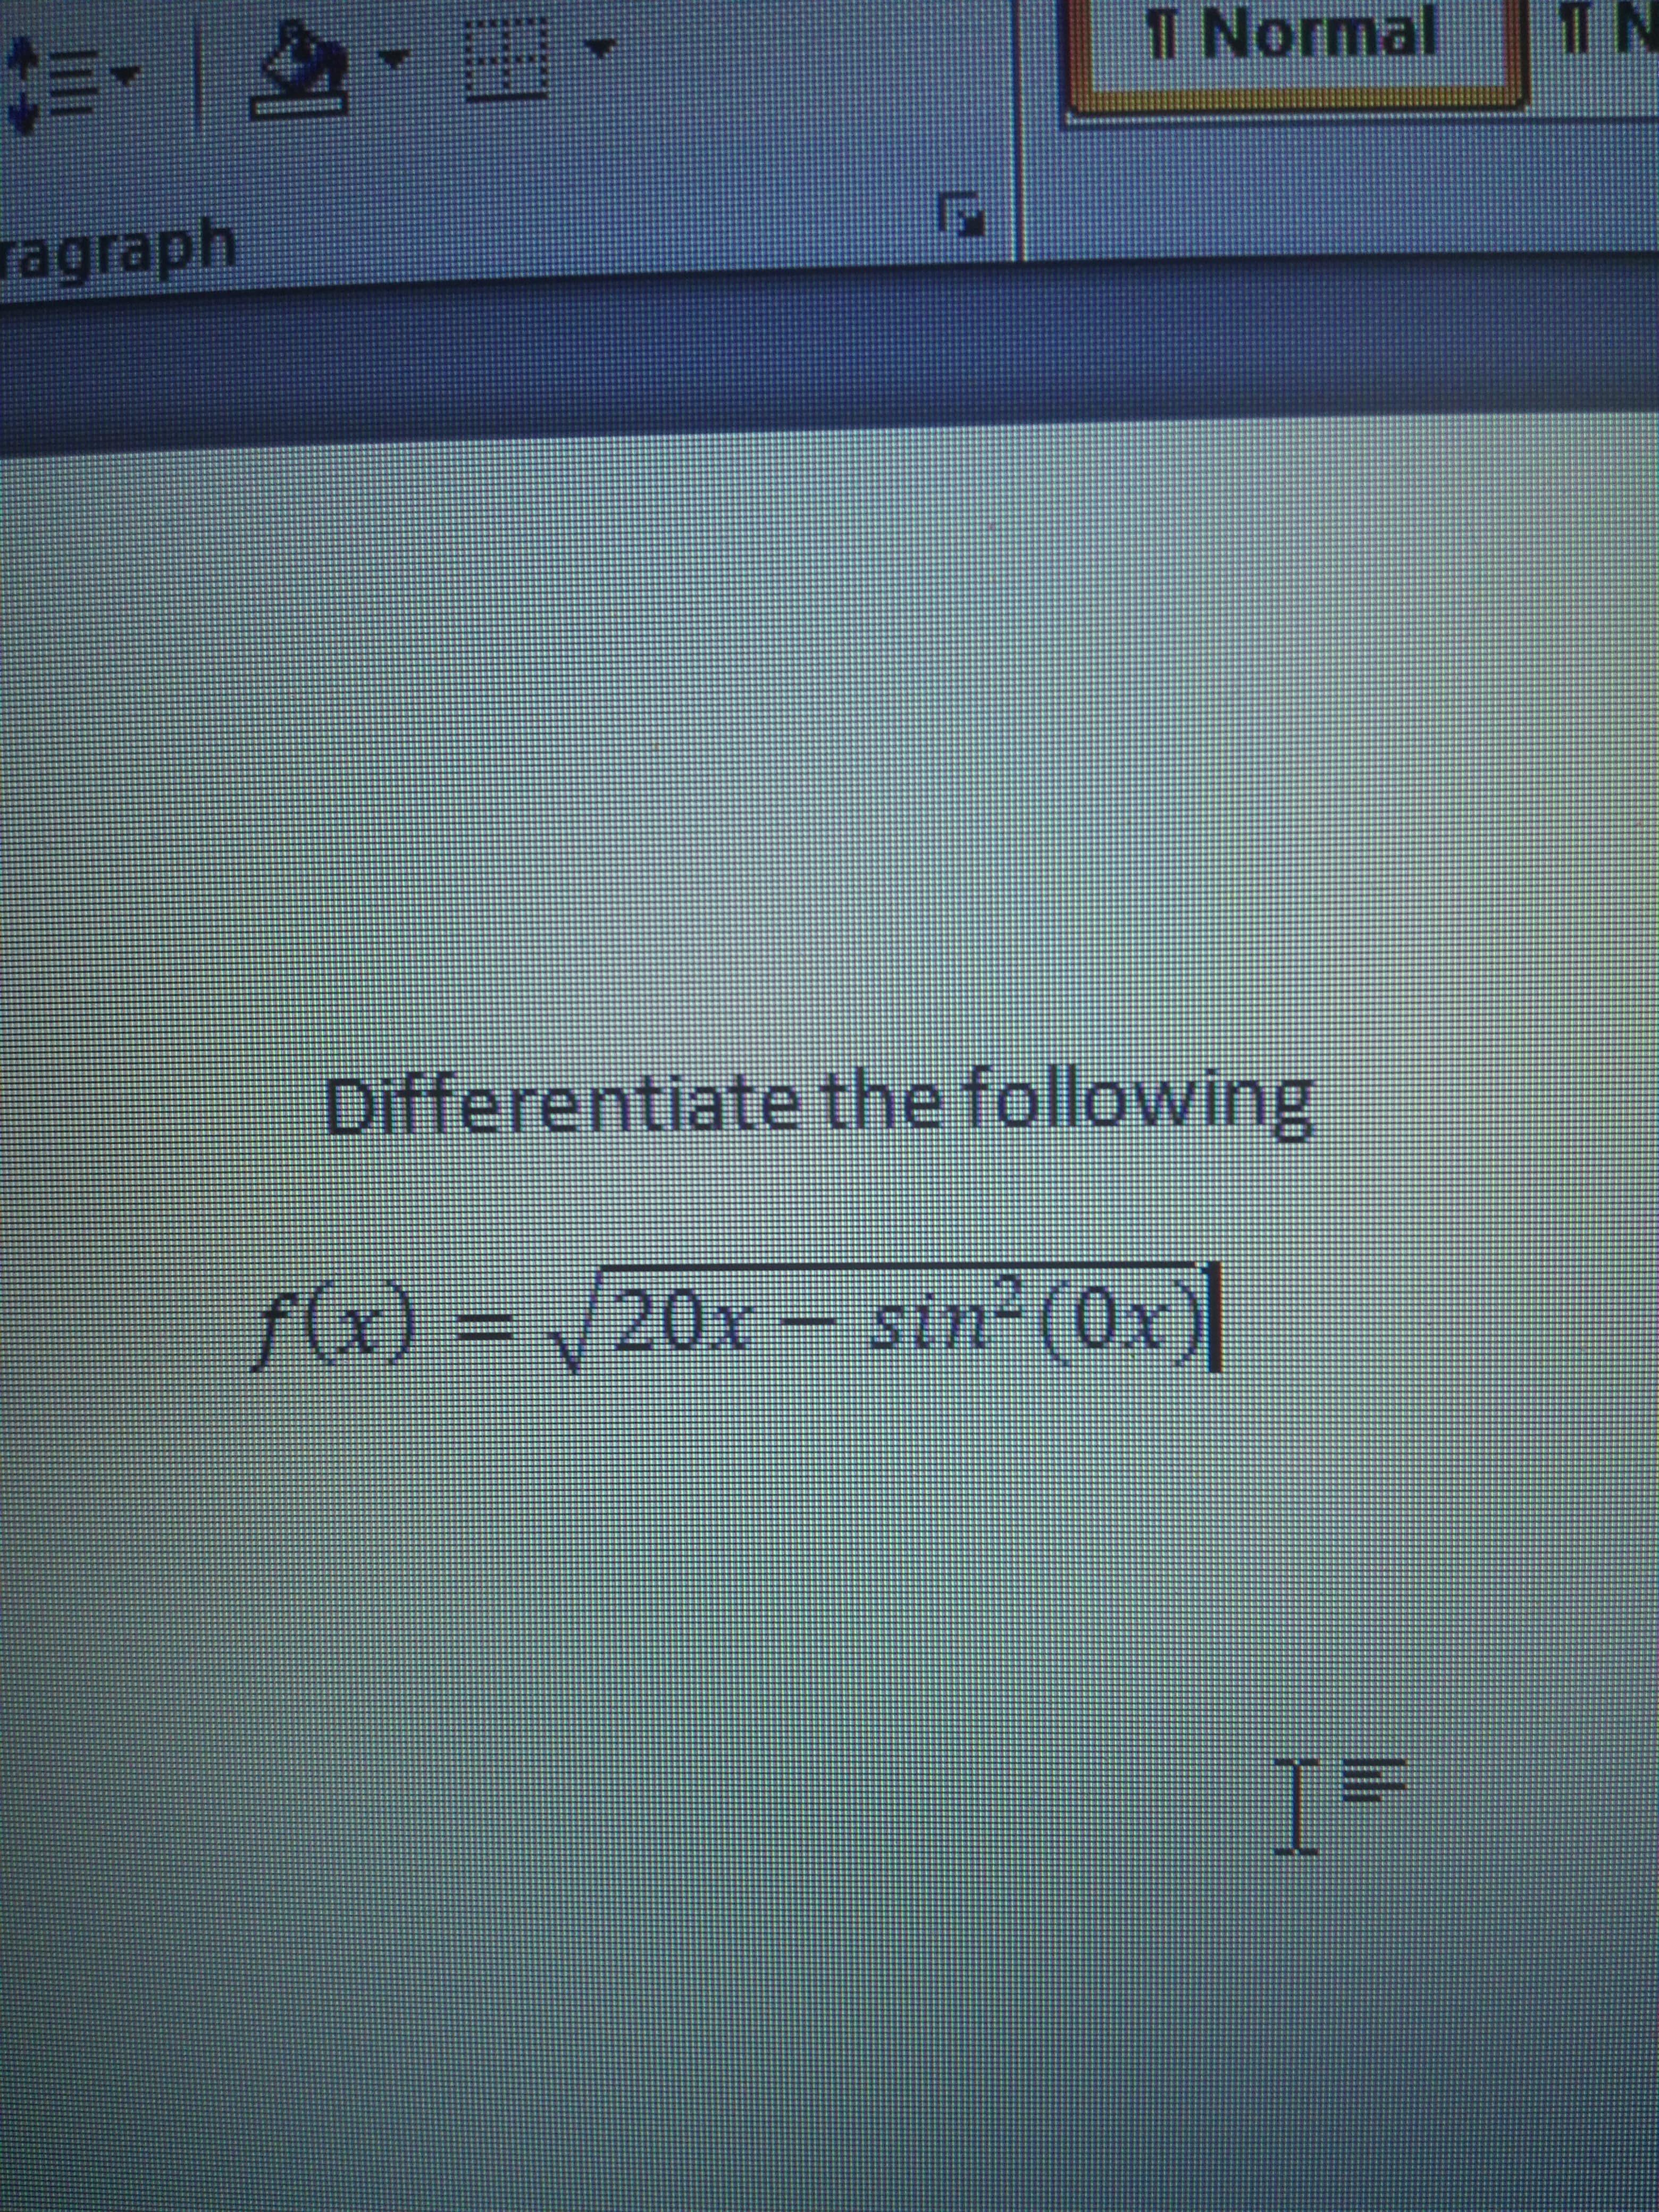 Differentiate the following
f(x) - /20x-stn²(0x)
